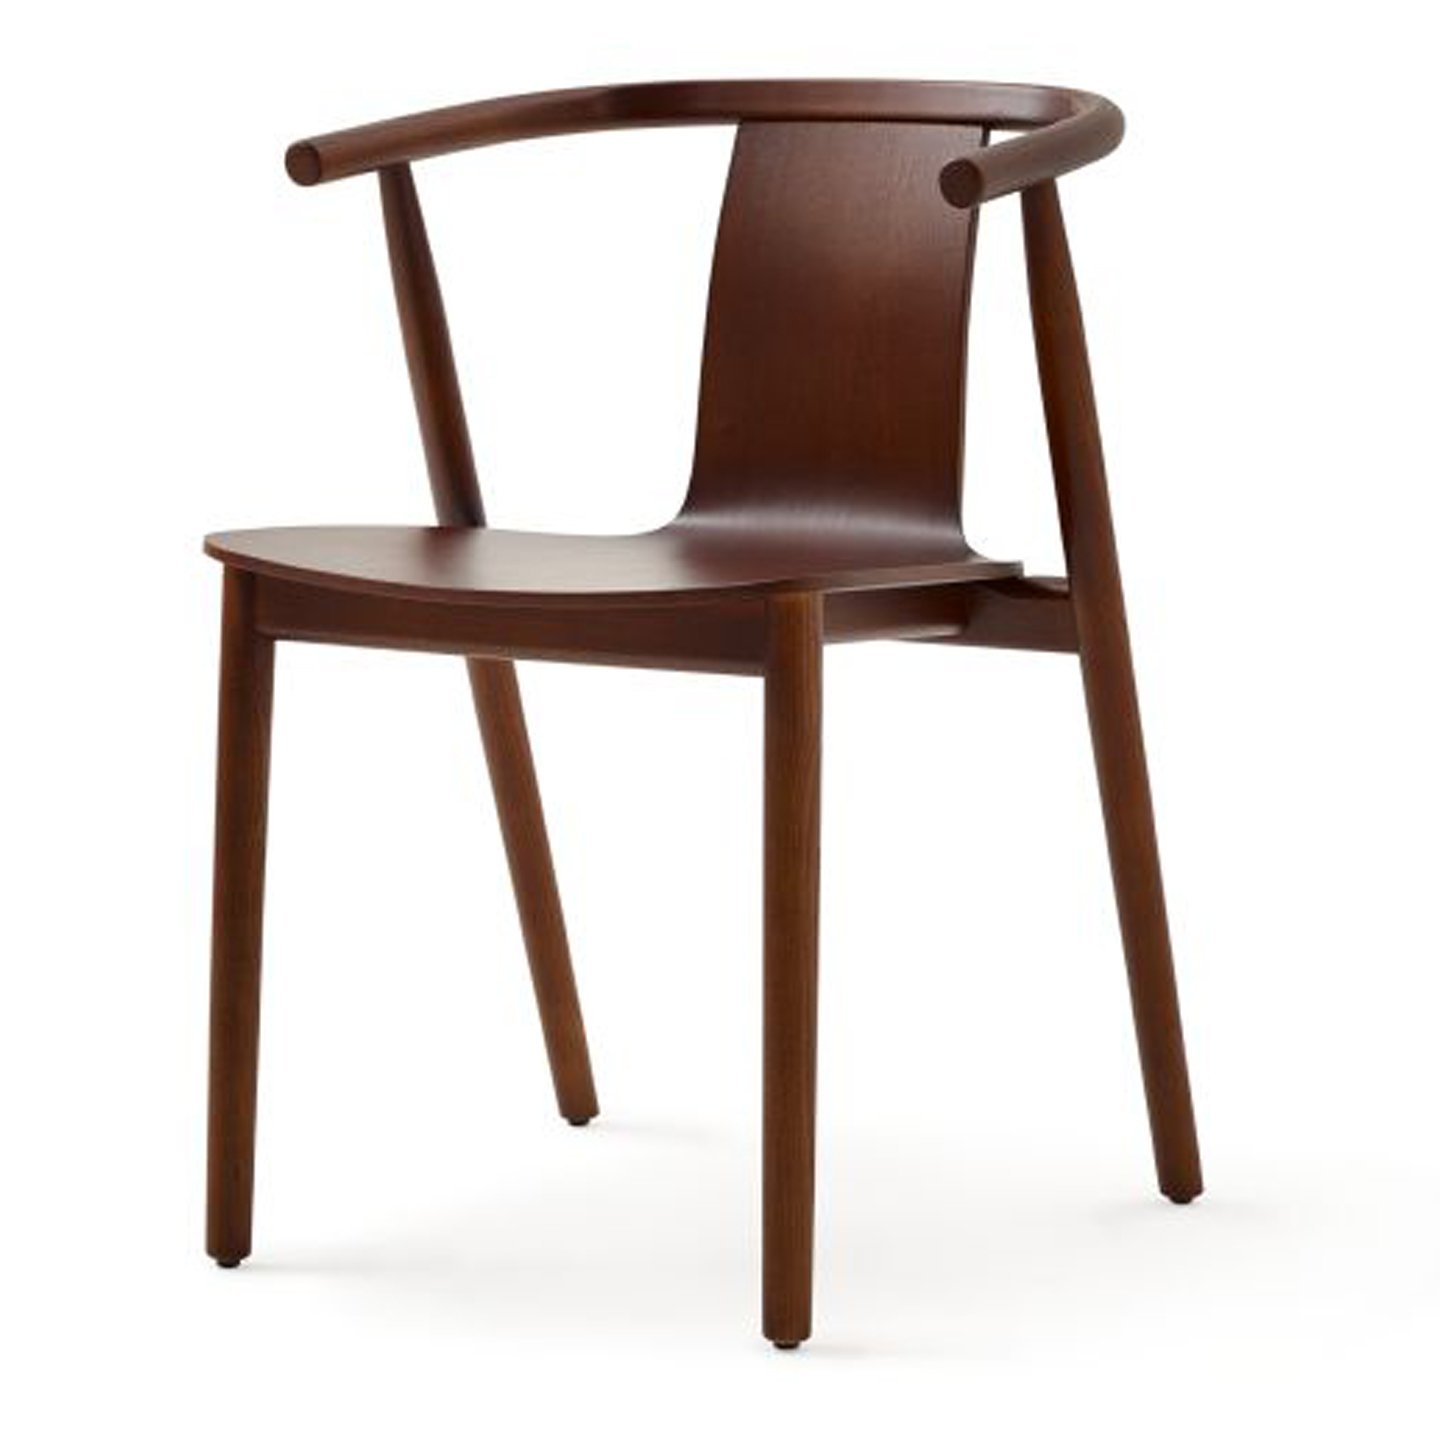 Haworth Bac chair in dark brown wood